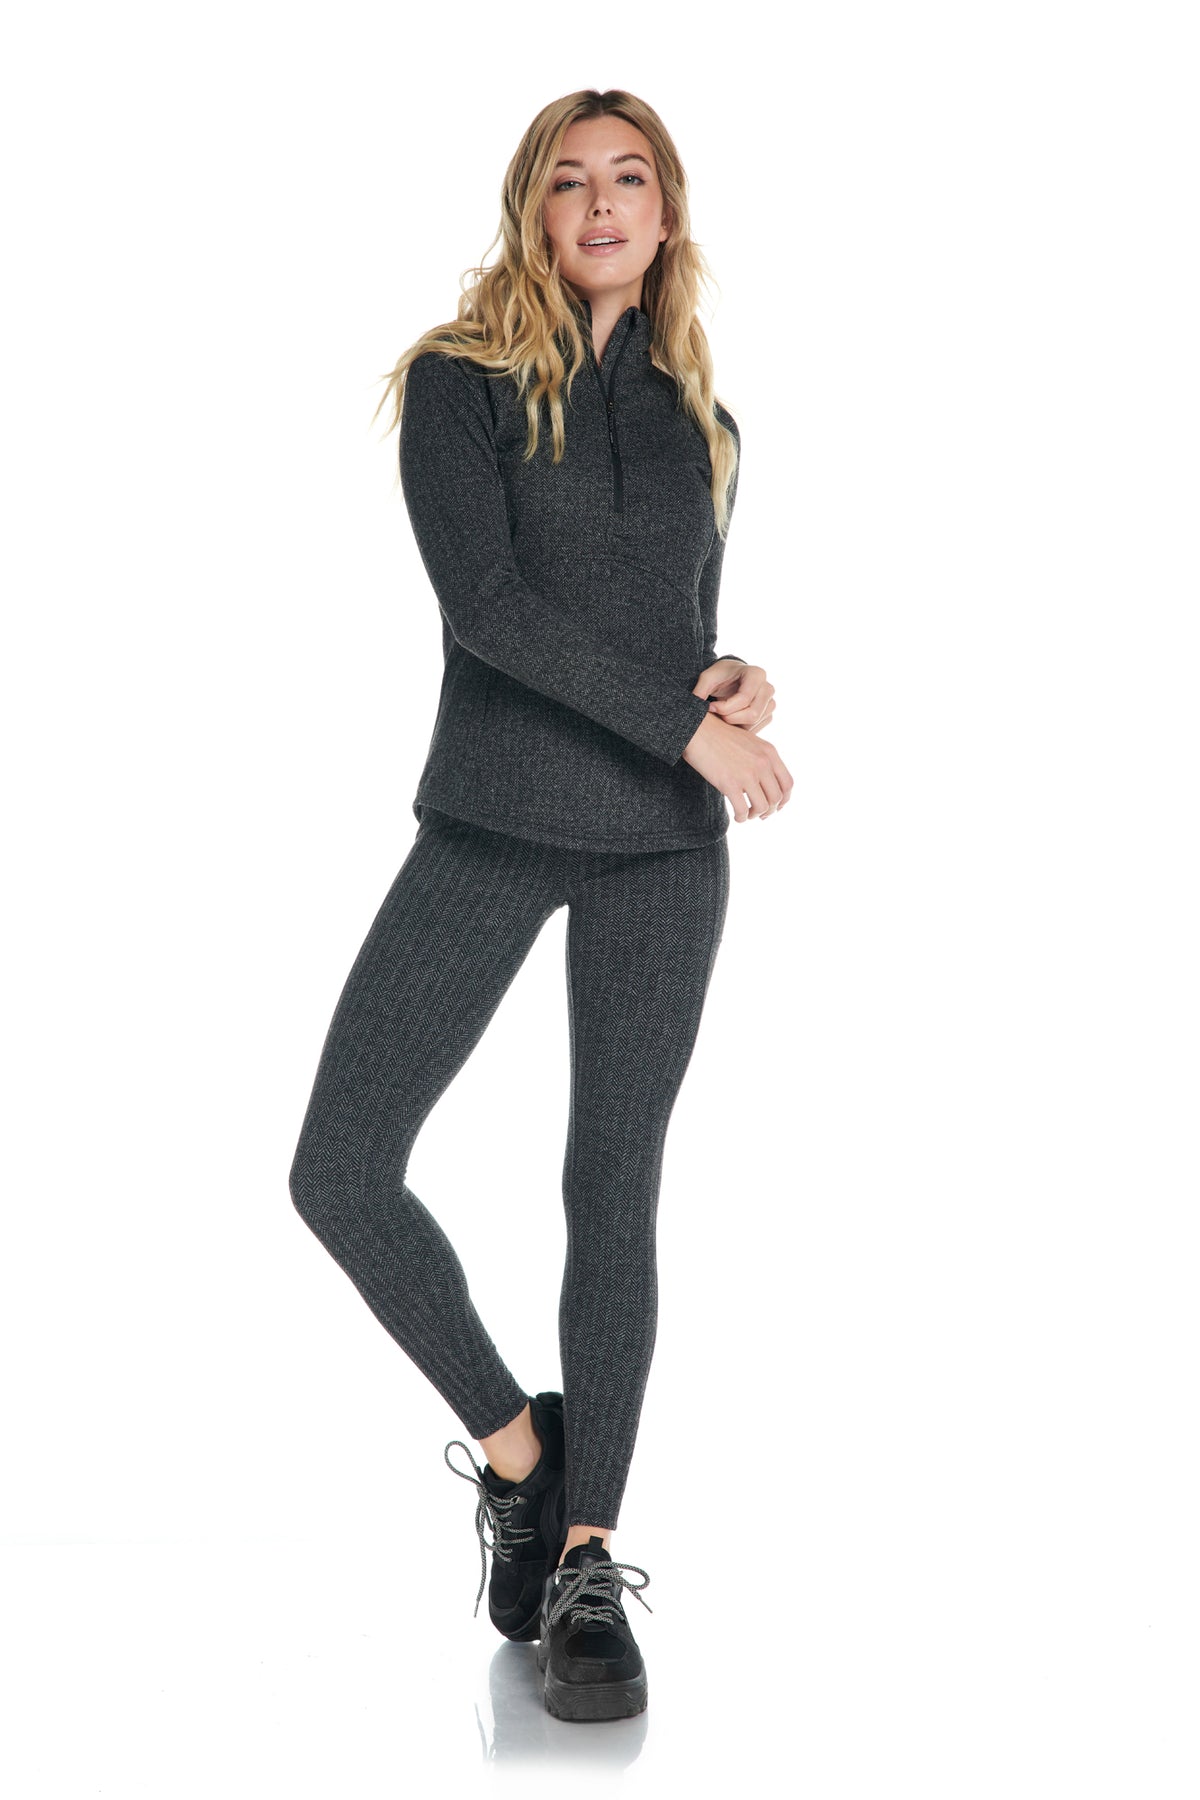 lou grey womens flannel knit herringbone leggings size M black gray